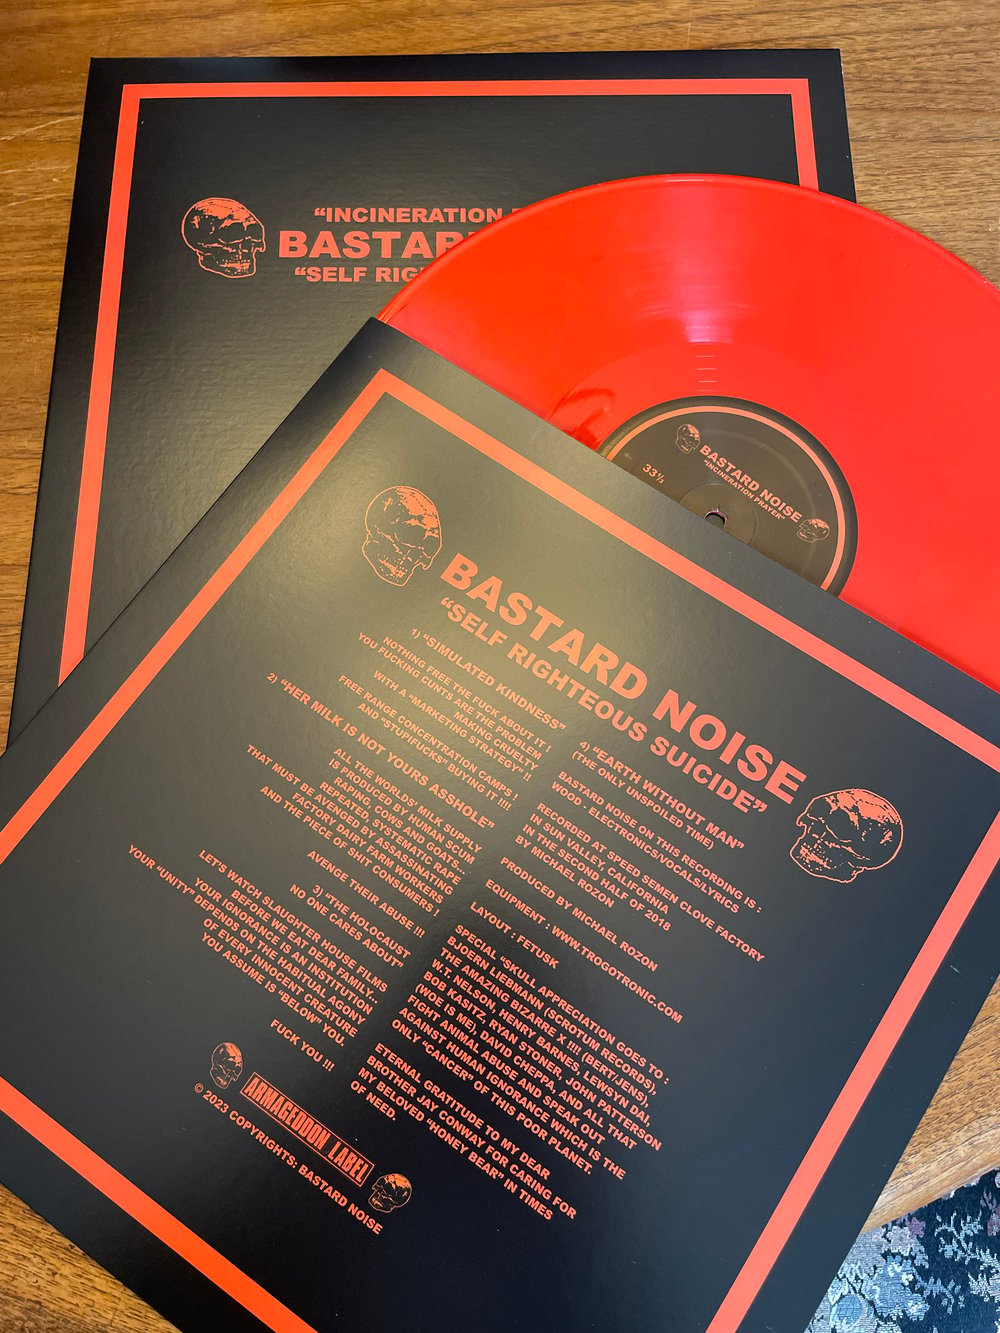 BASTARD NOISE "Incineration Prayer - Self Righteous Suicide" LP PRE-ORDER)